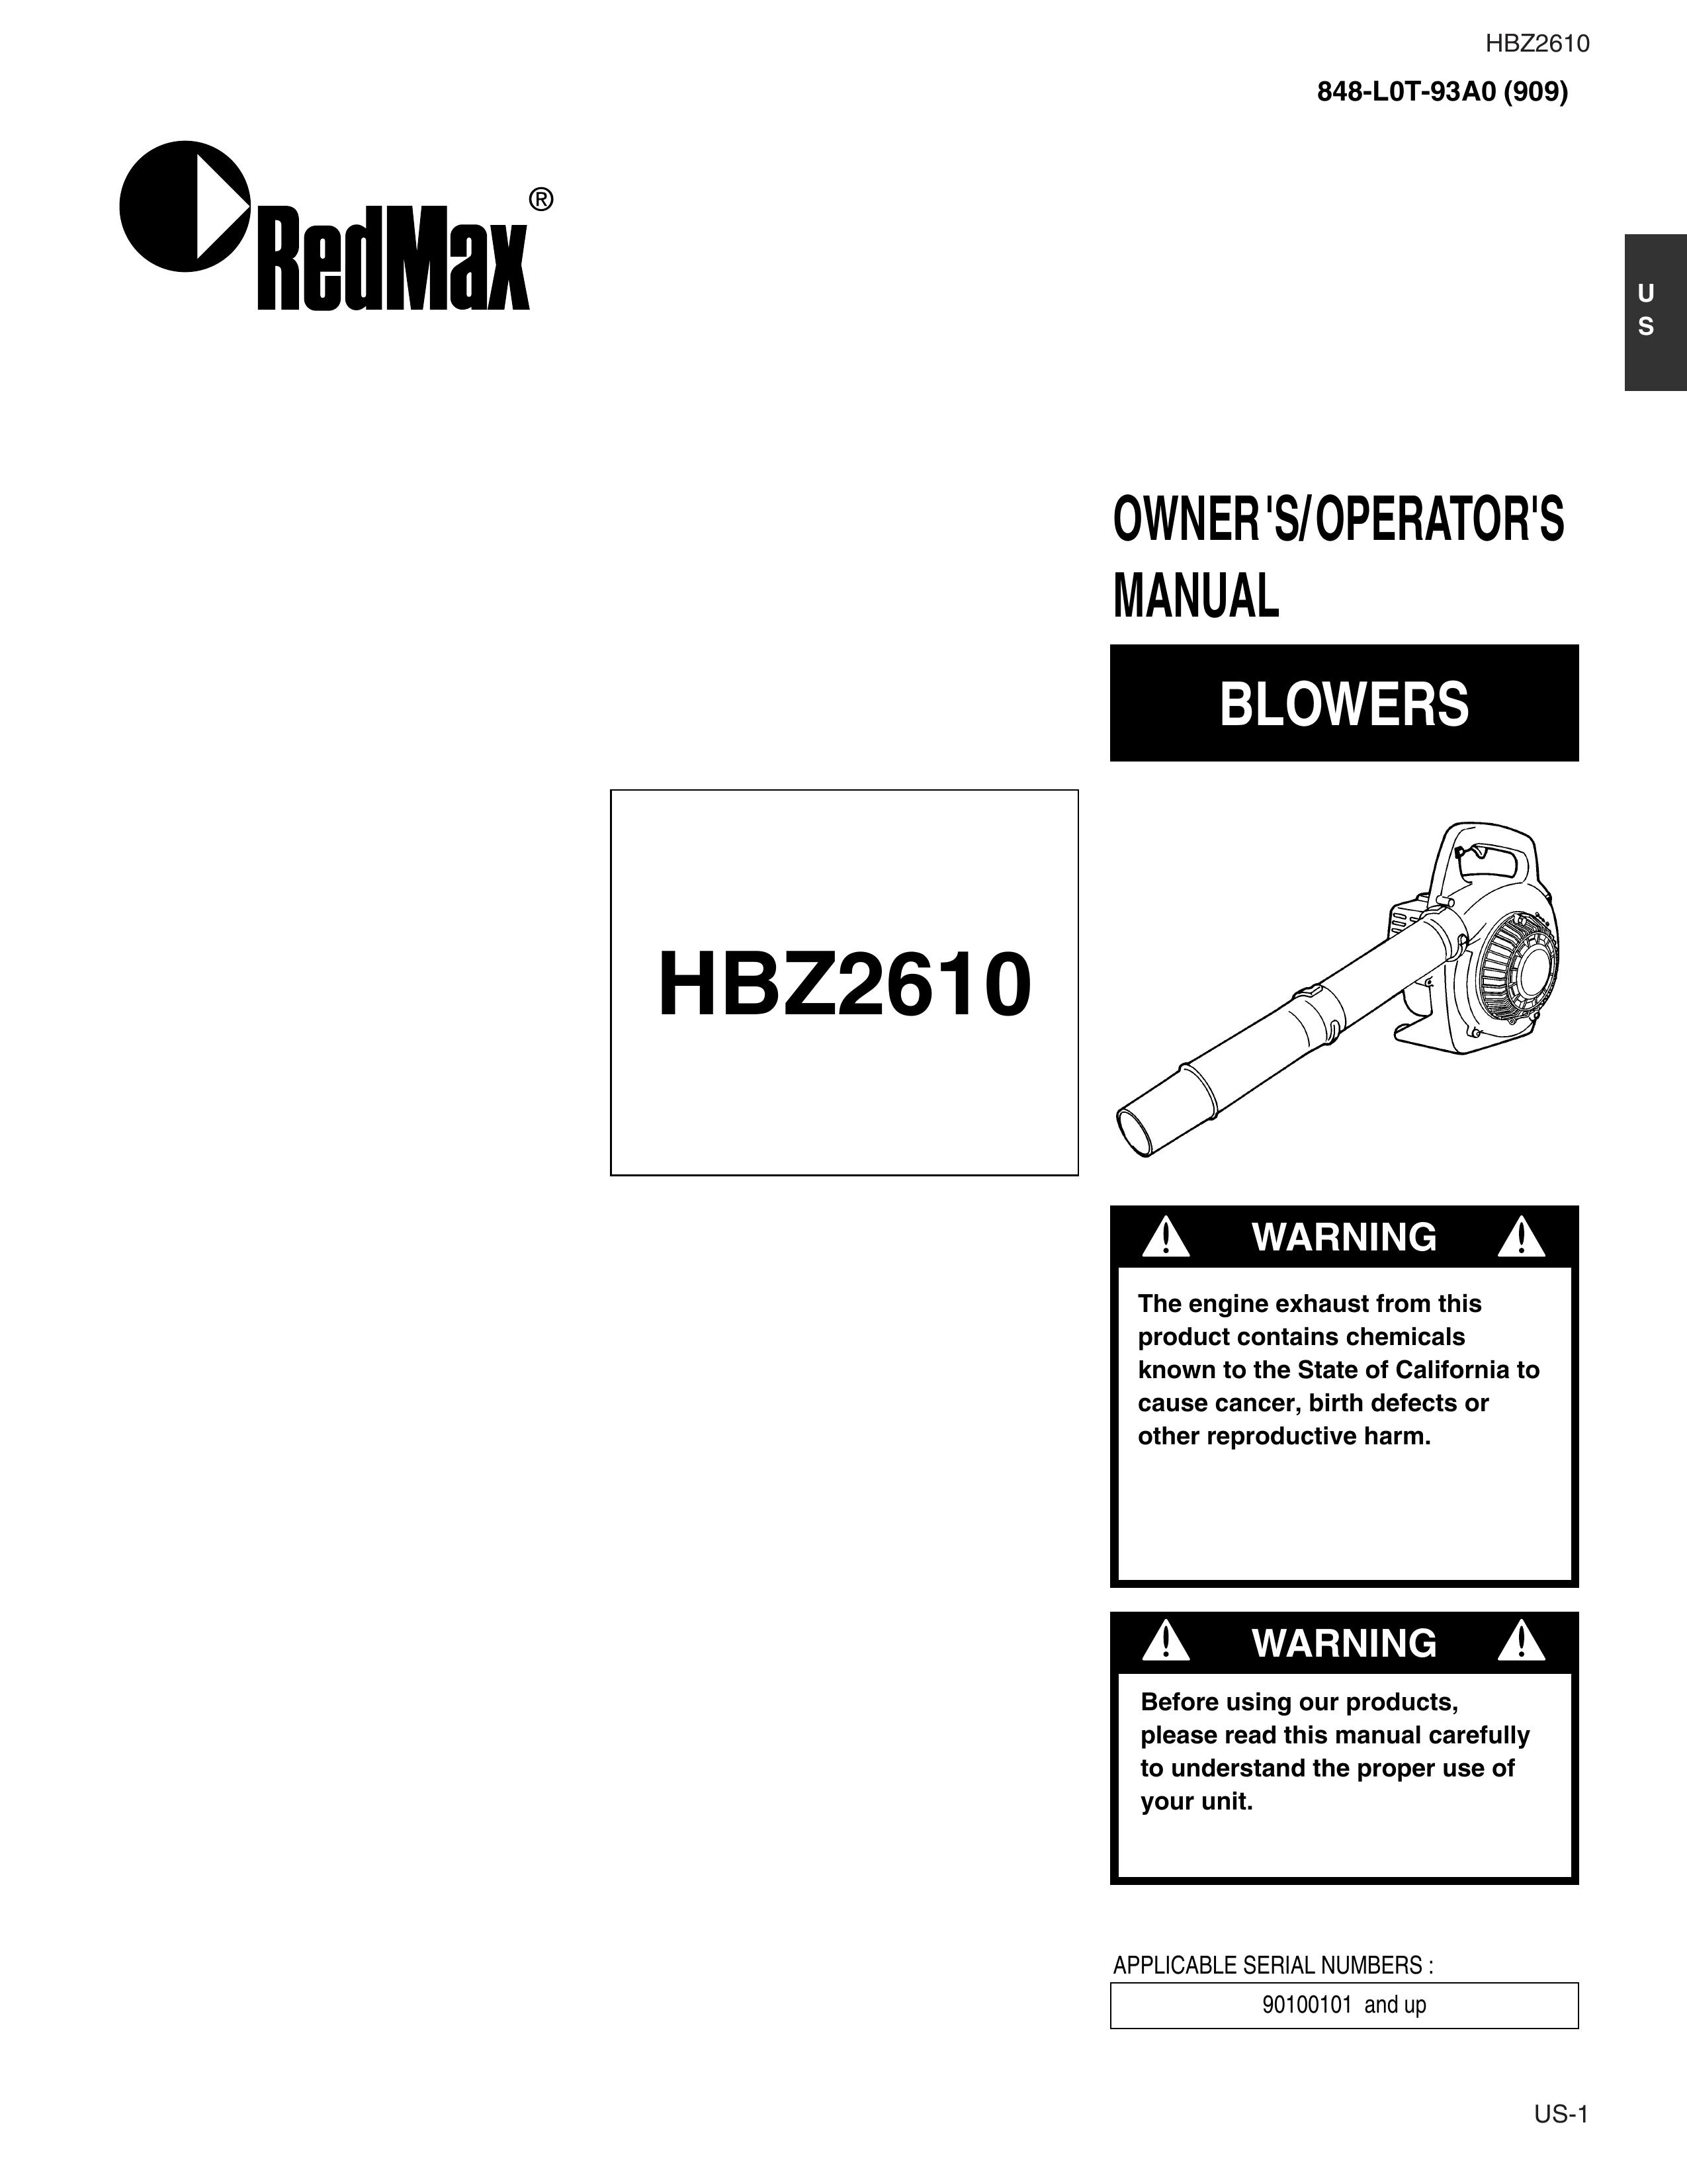 RedMax HBZ2610 Blower User Manual